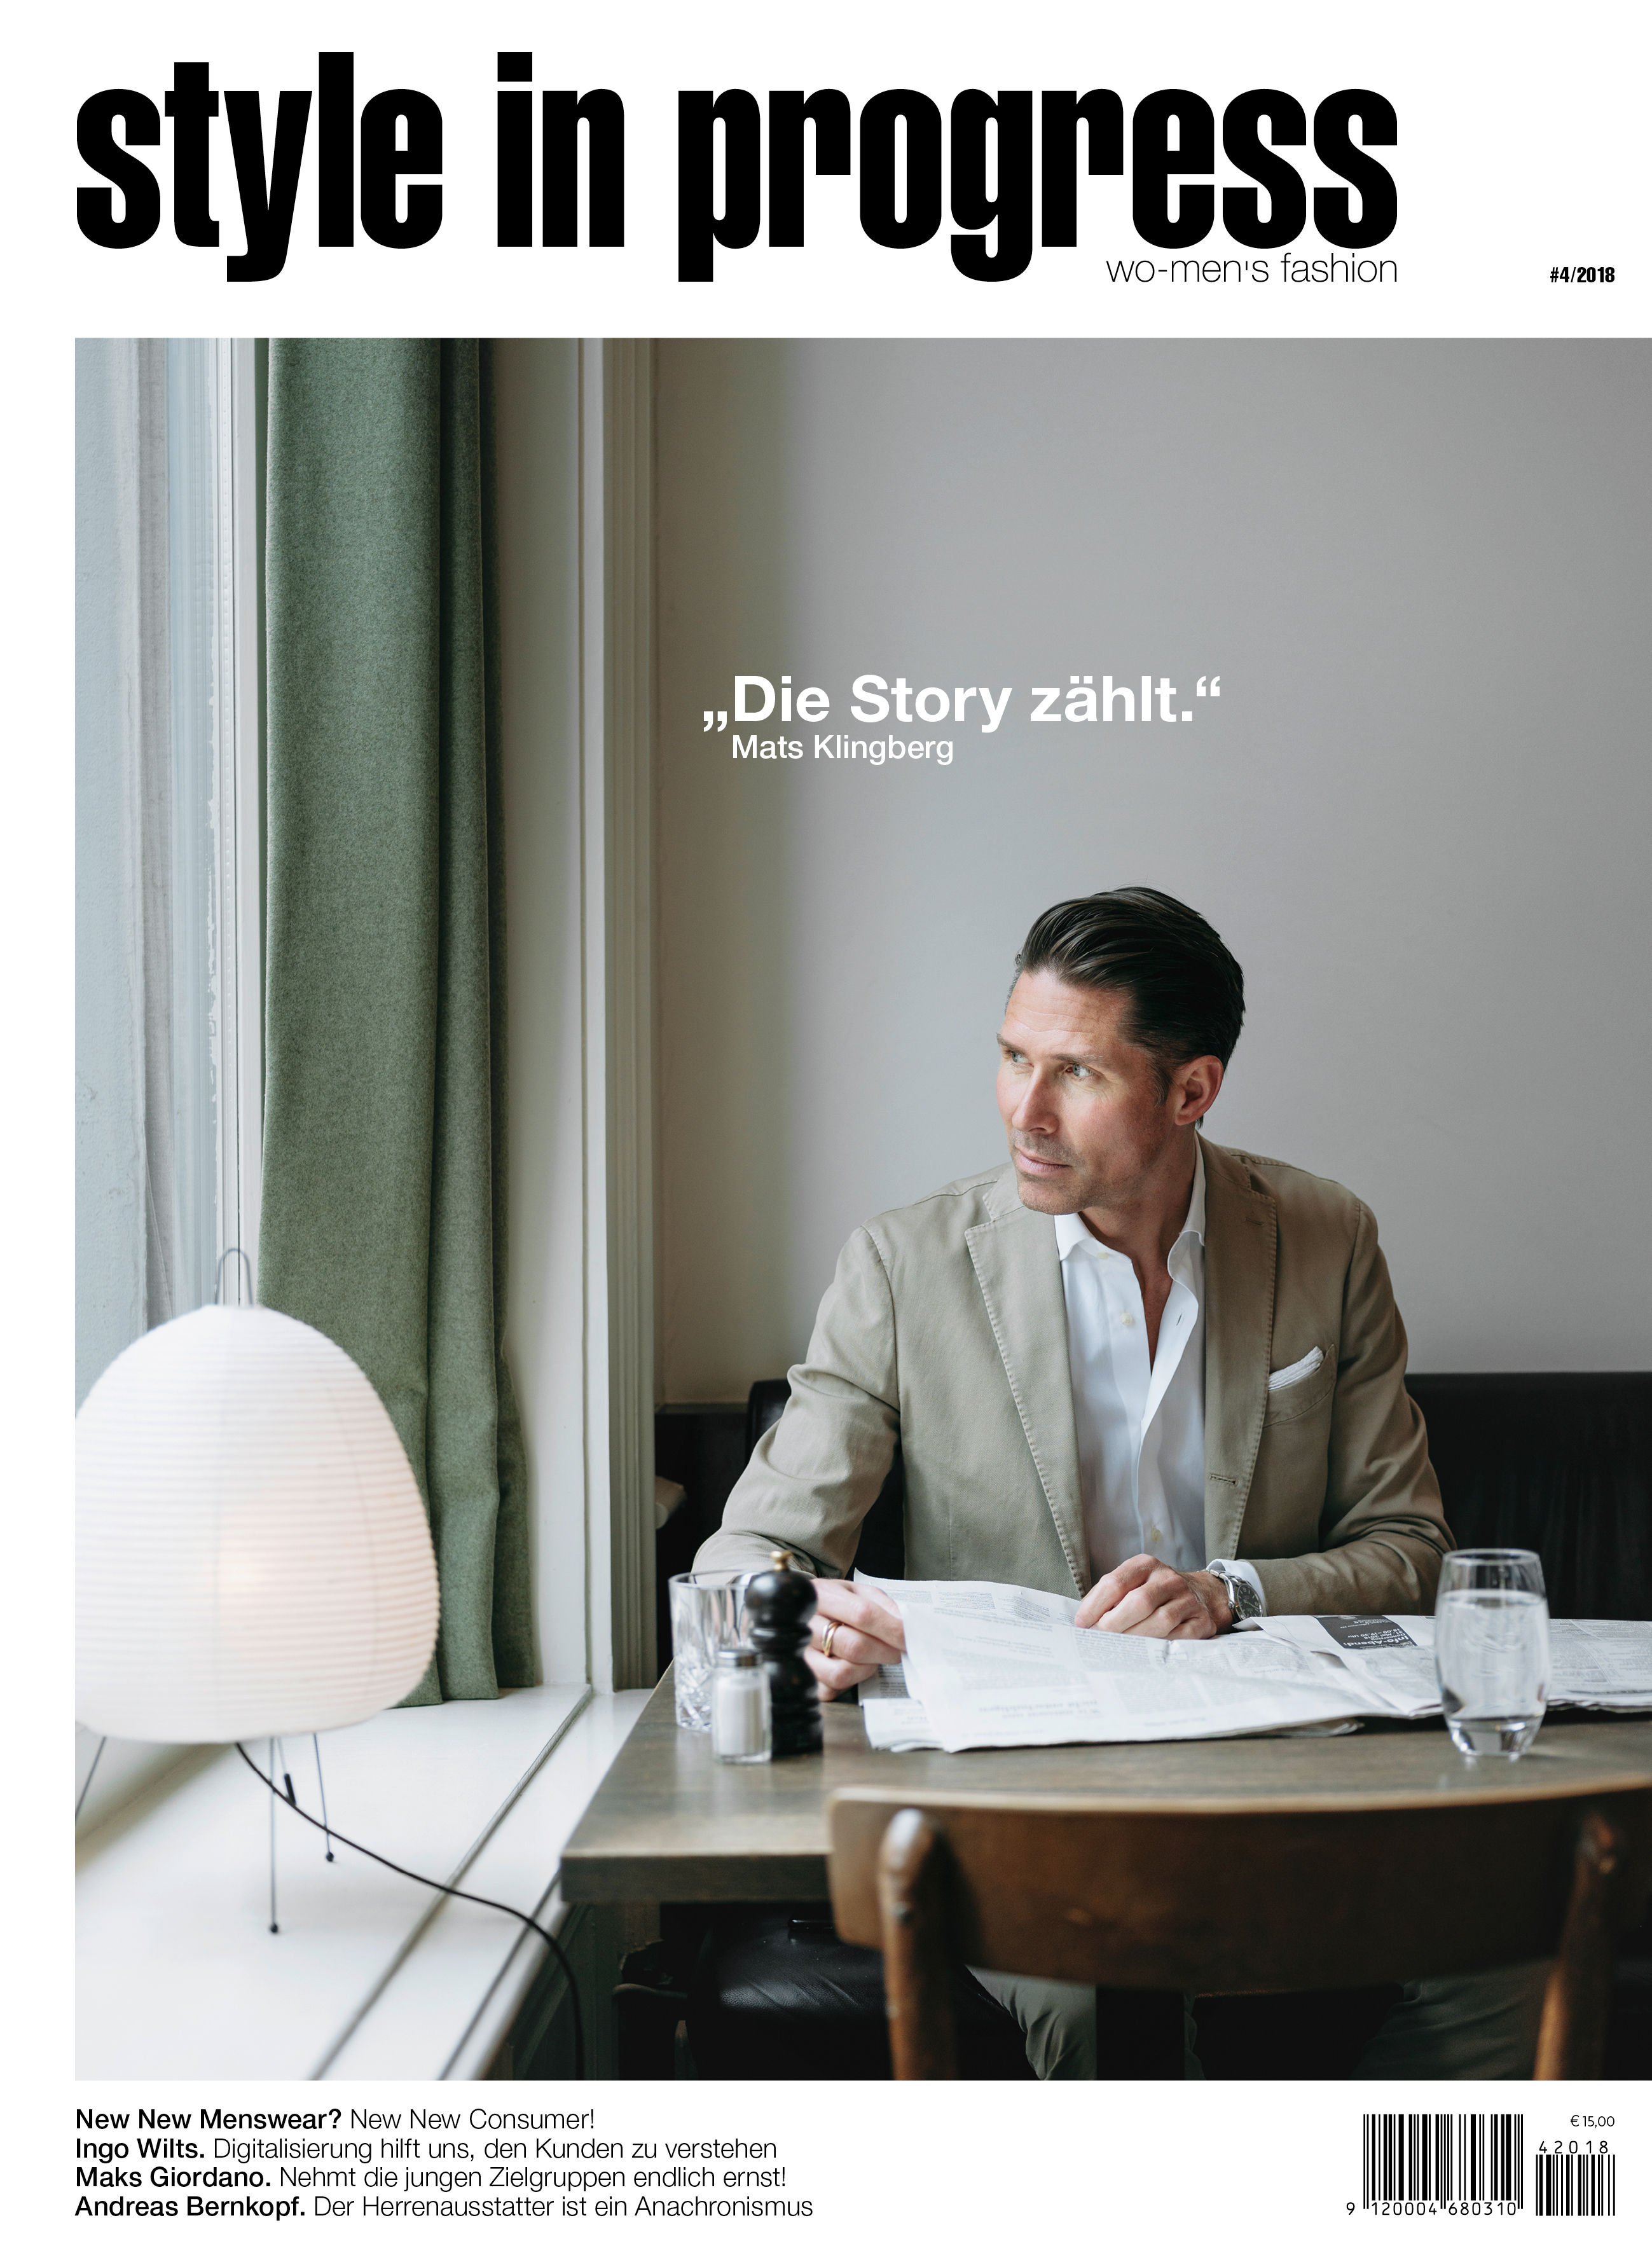 style in progress 2/2017 – Deutsche Ausgabe by style in progress